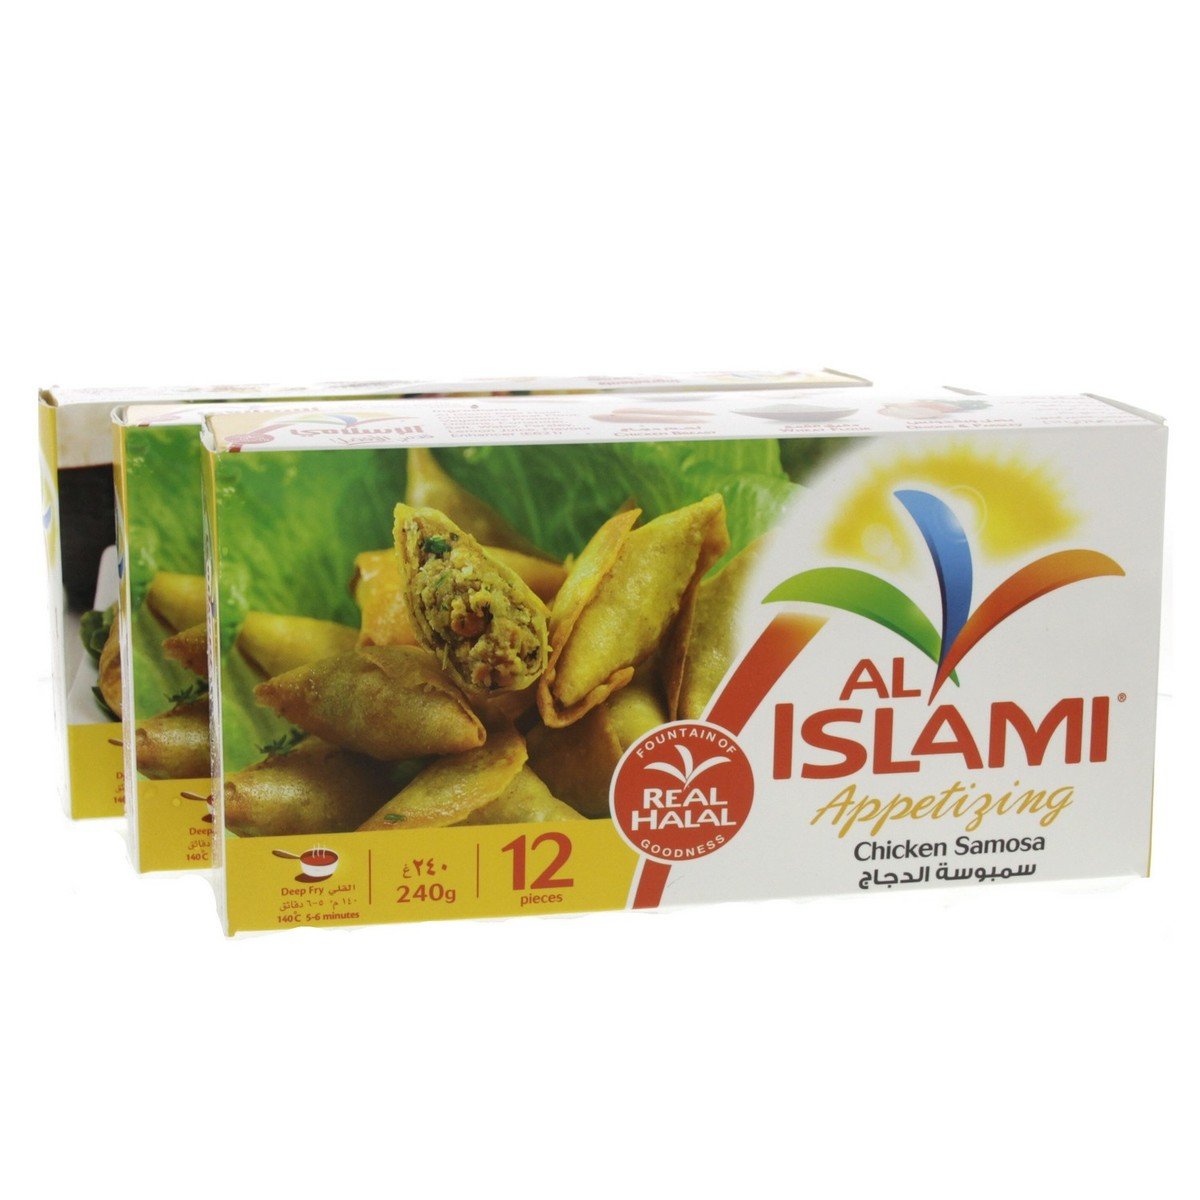 Al Islami Appetizing Chicken samoosa 3 x 240g